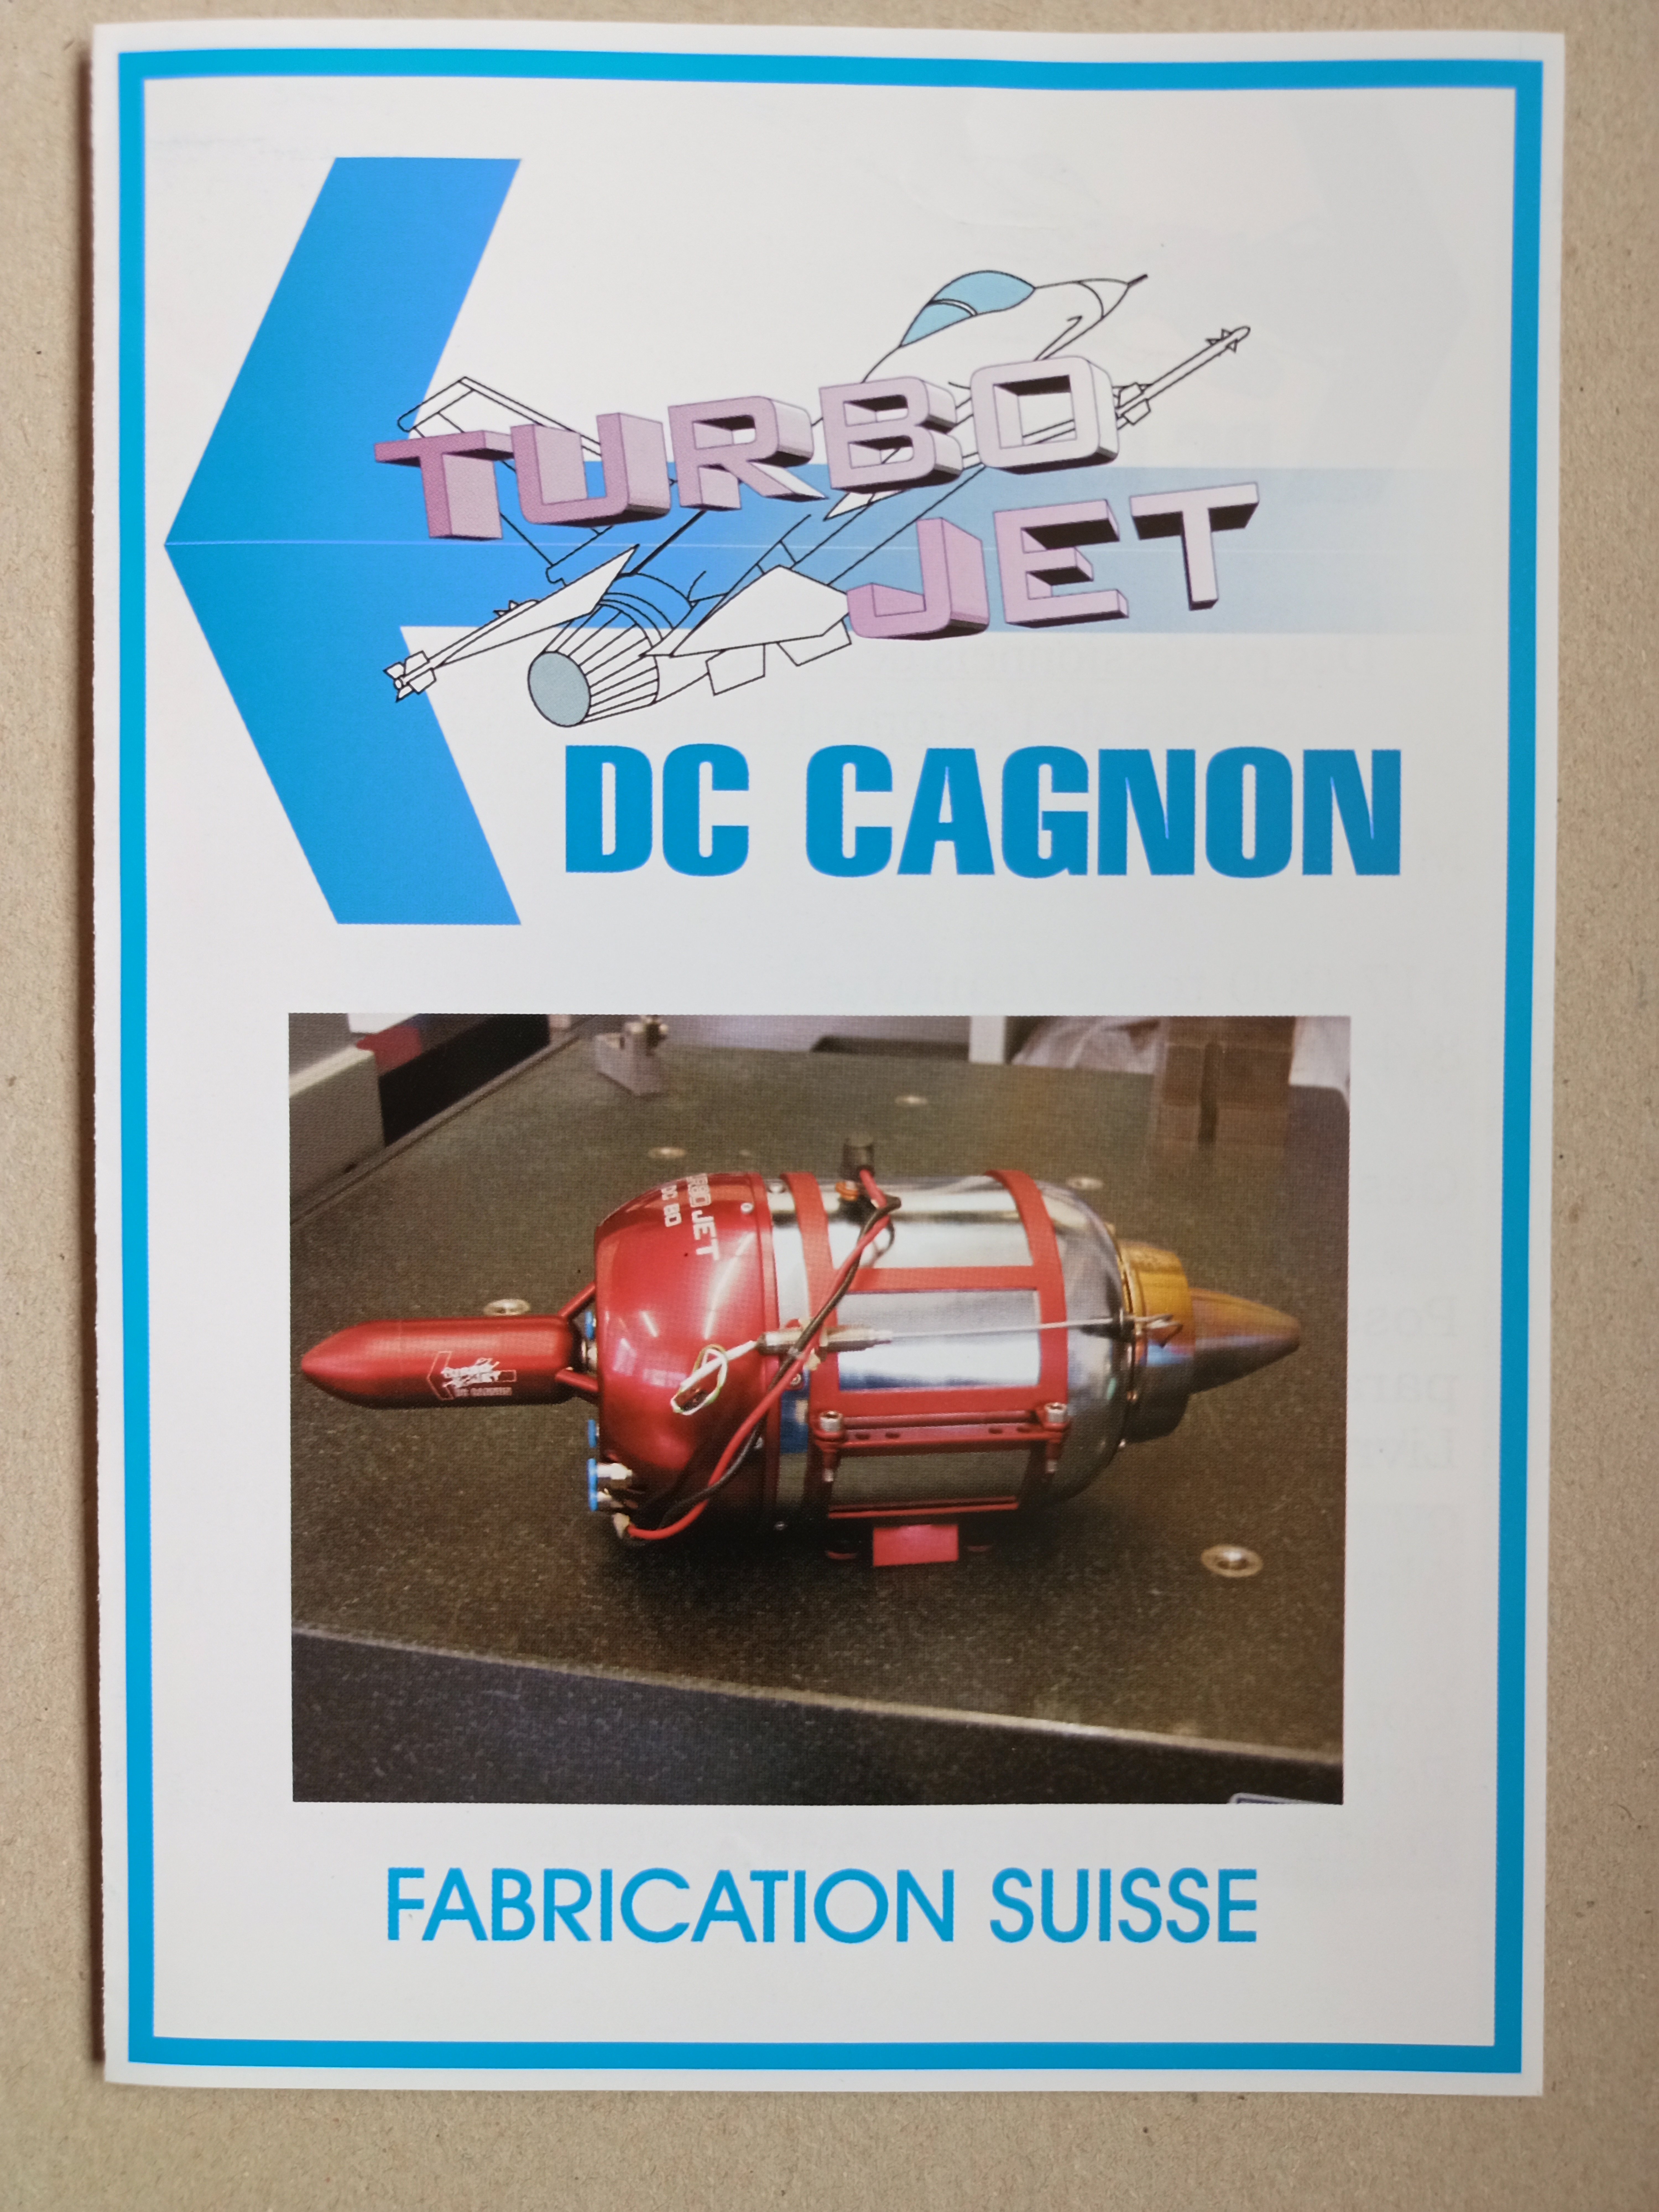 Flyer Turbo Jet DC Cagnon (Deutsches Segelflugmuseum mit Modellflug CC BY-NC-SA)